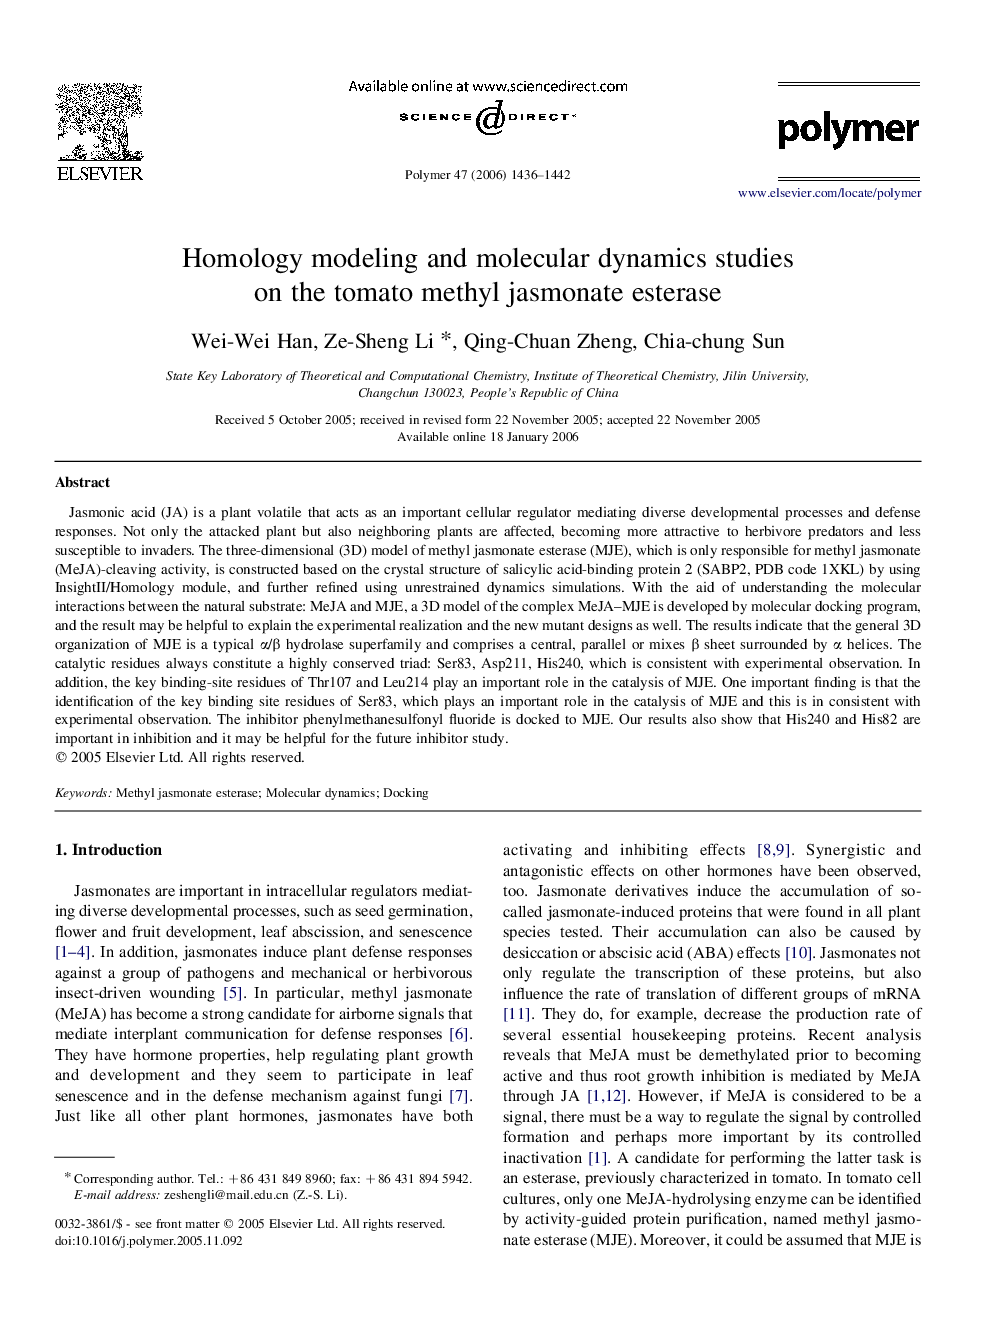 Homology modeling and molecular dynamics studies on the tomato methyl jasmonate esterase